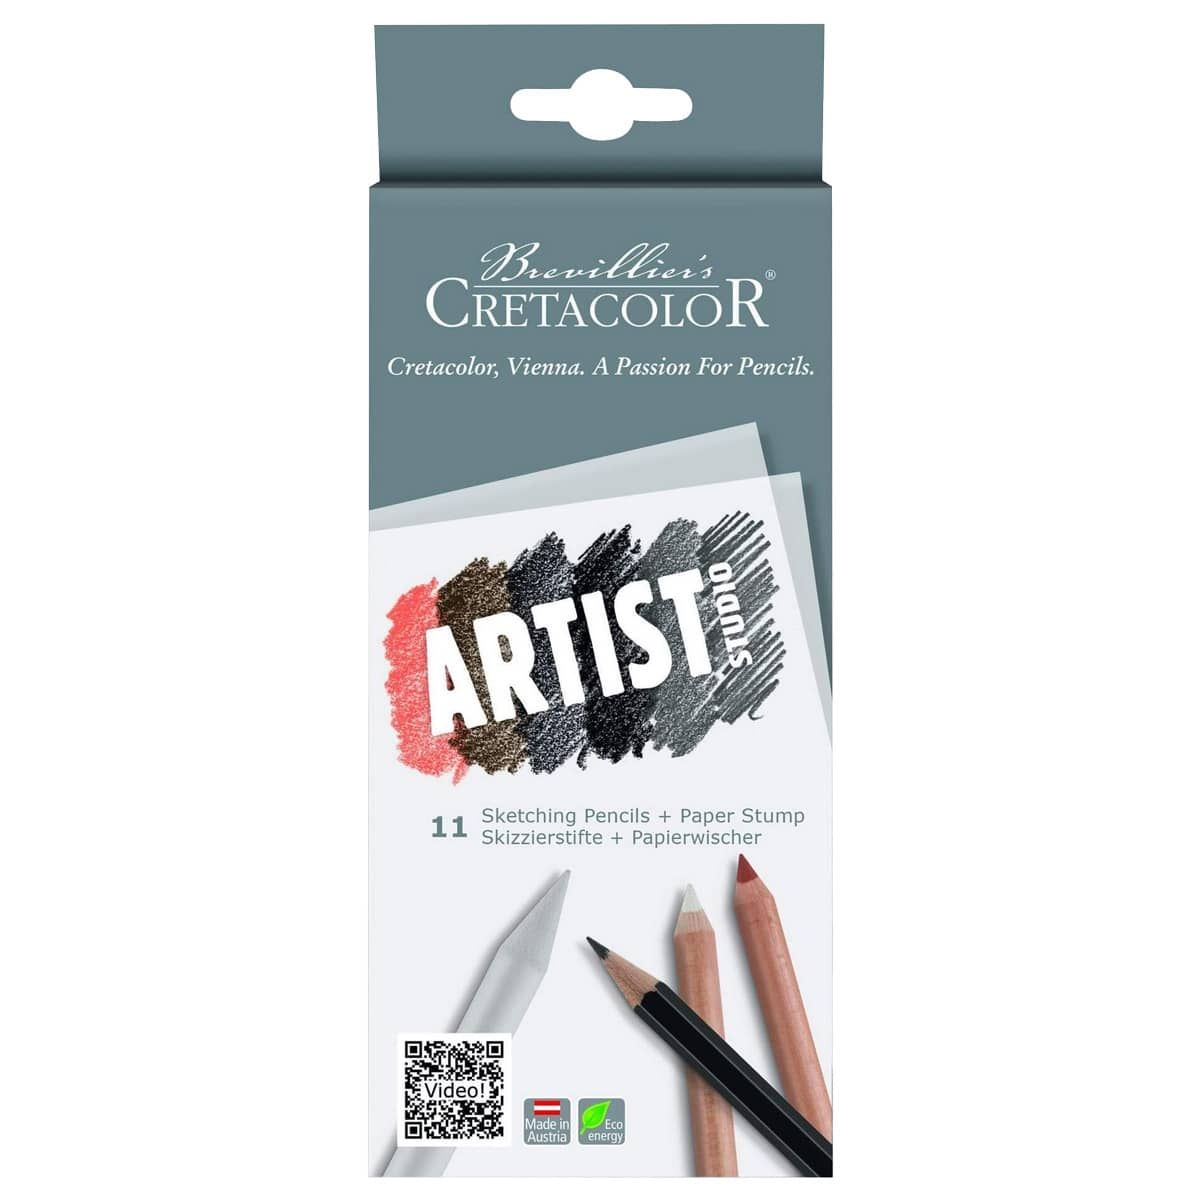 Cretacolor Artist Studio Drawing Set